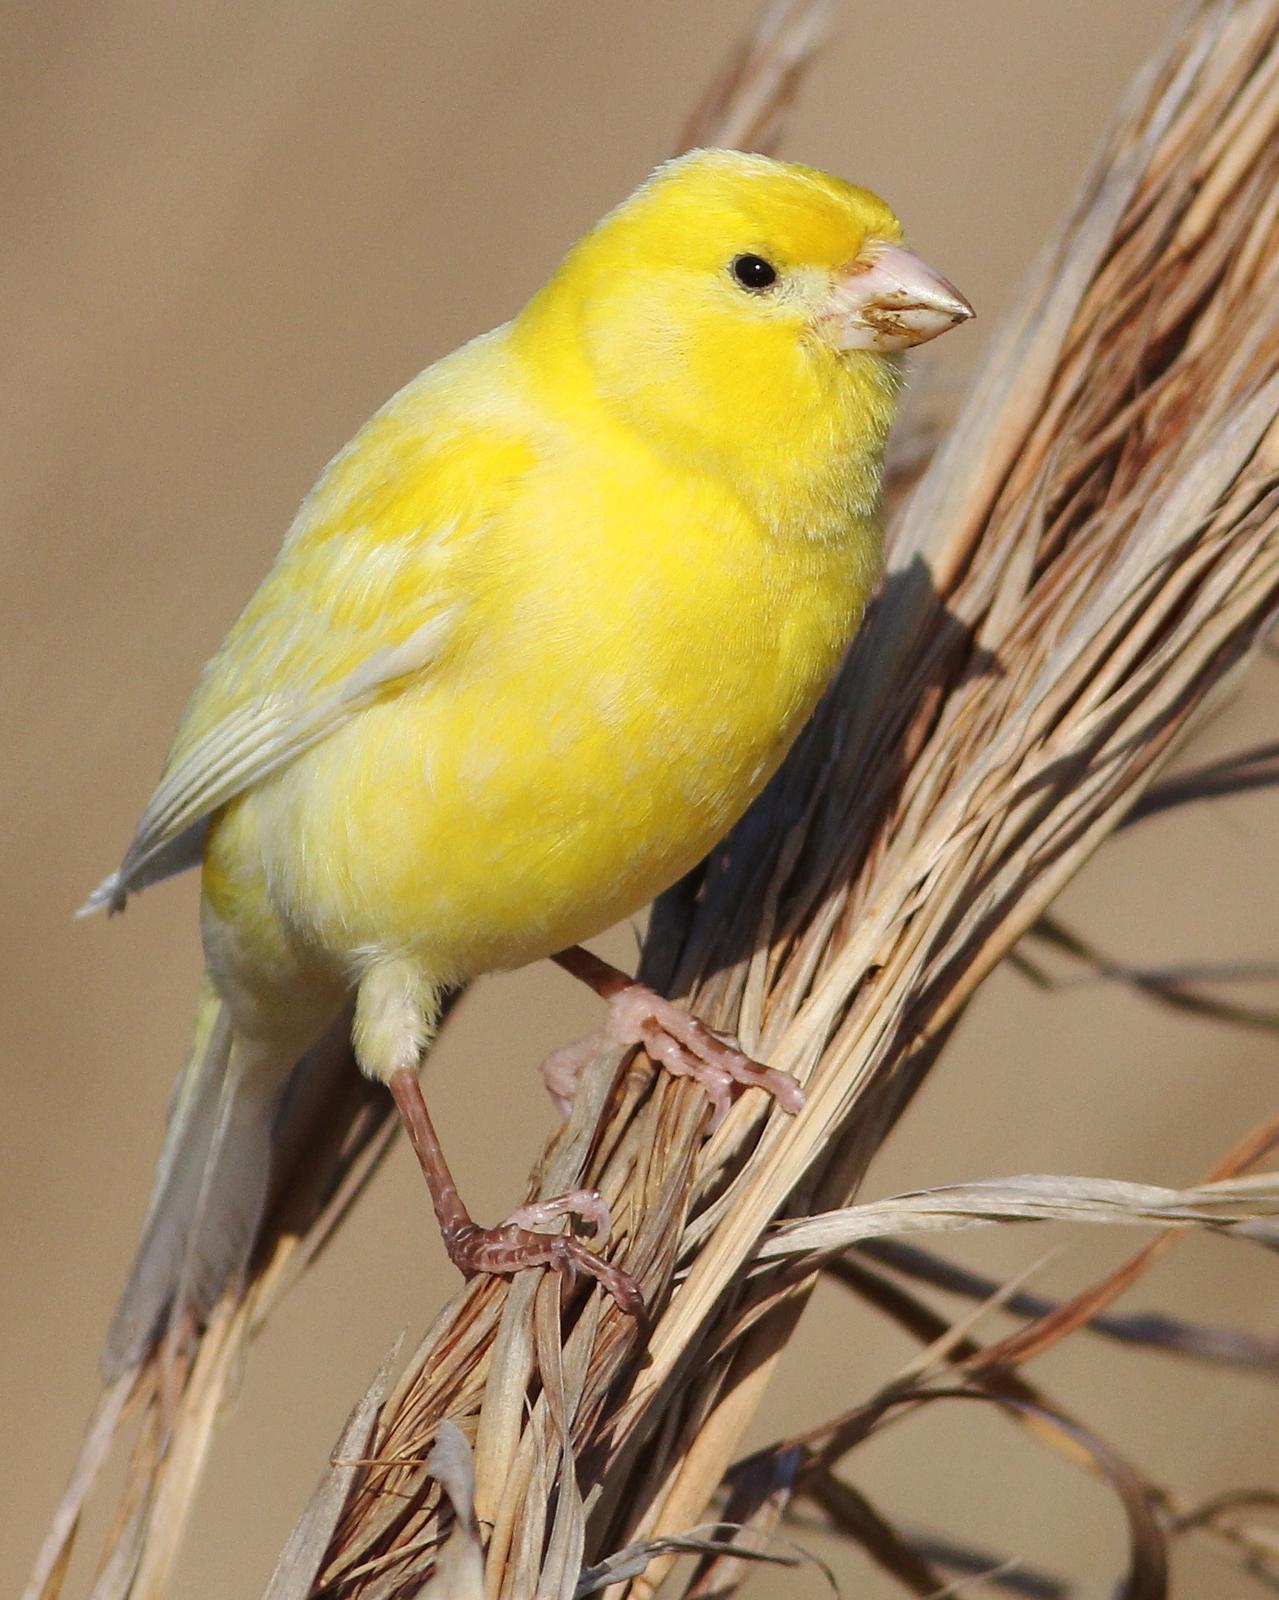 Island Canary (Domestic type) Photo by Cameron Rutt